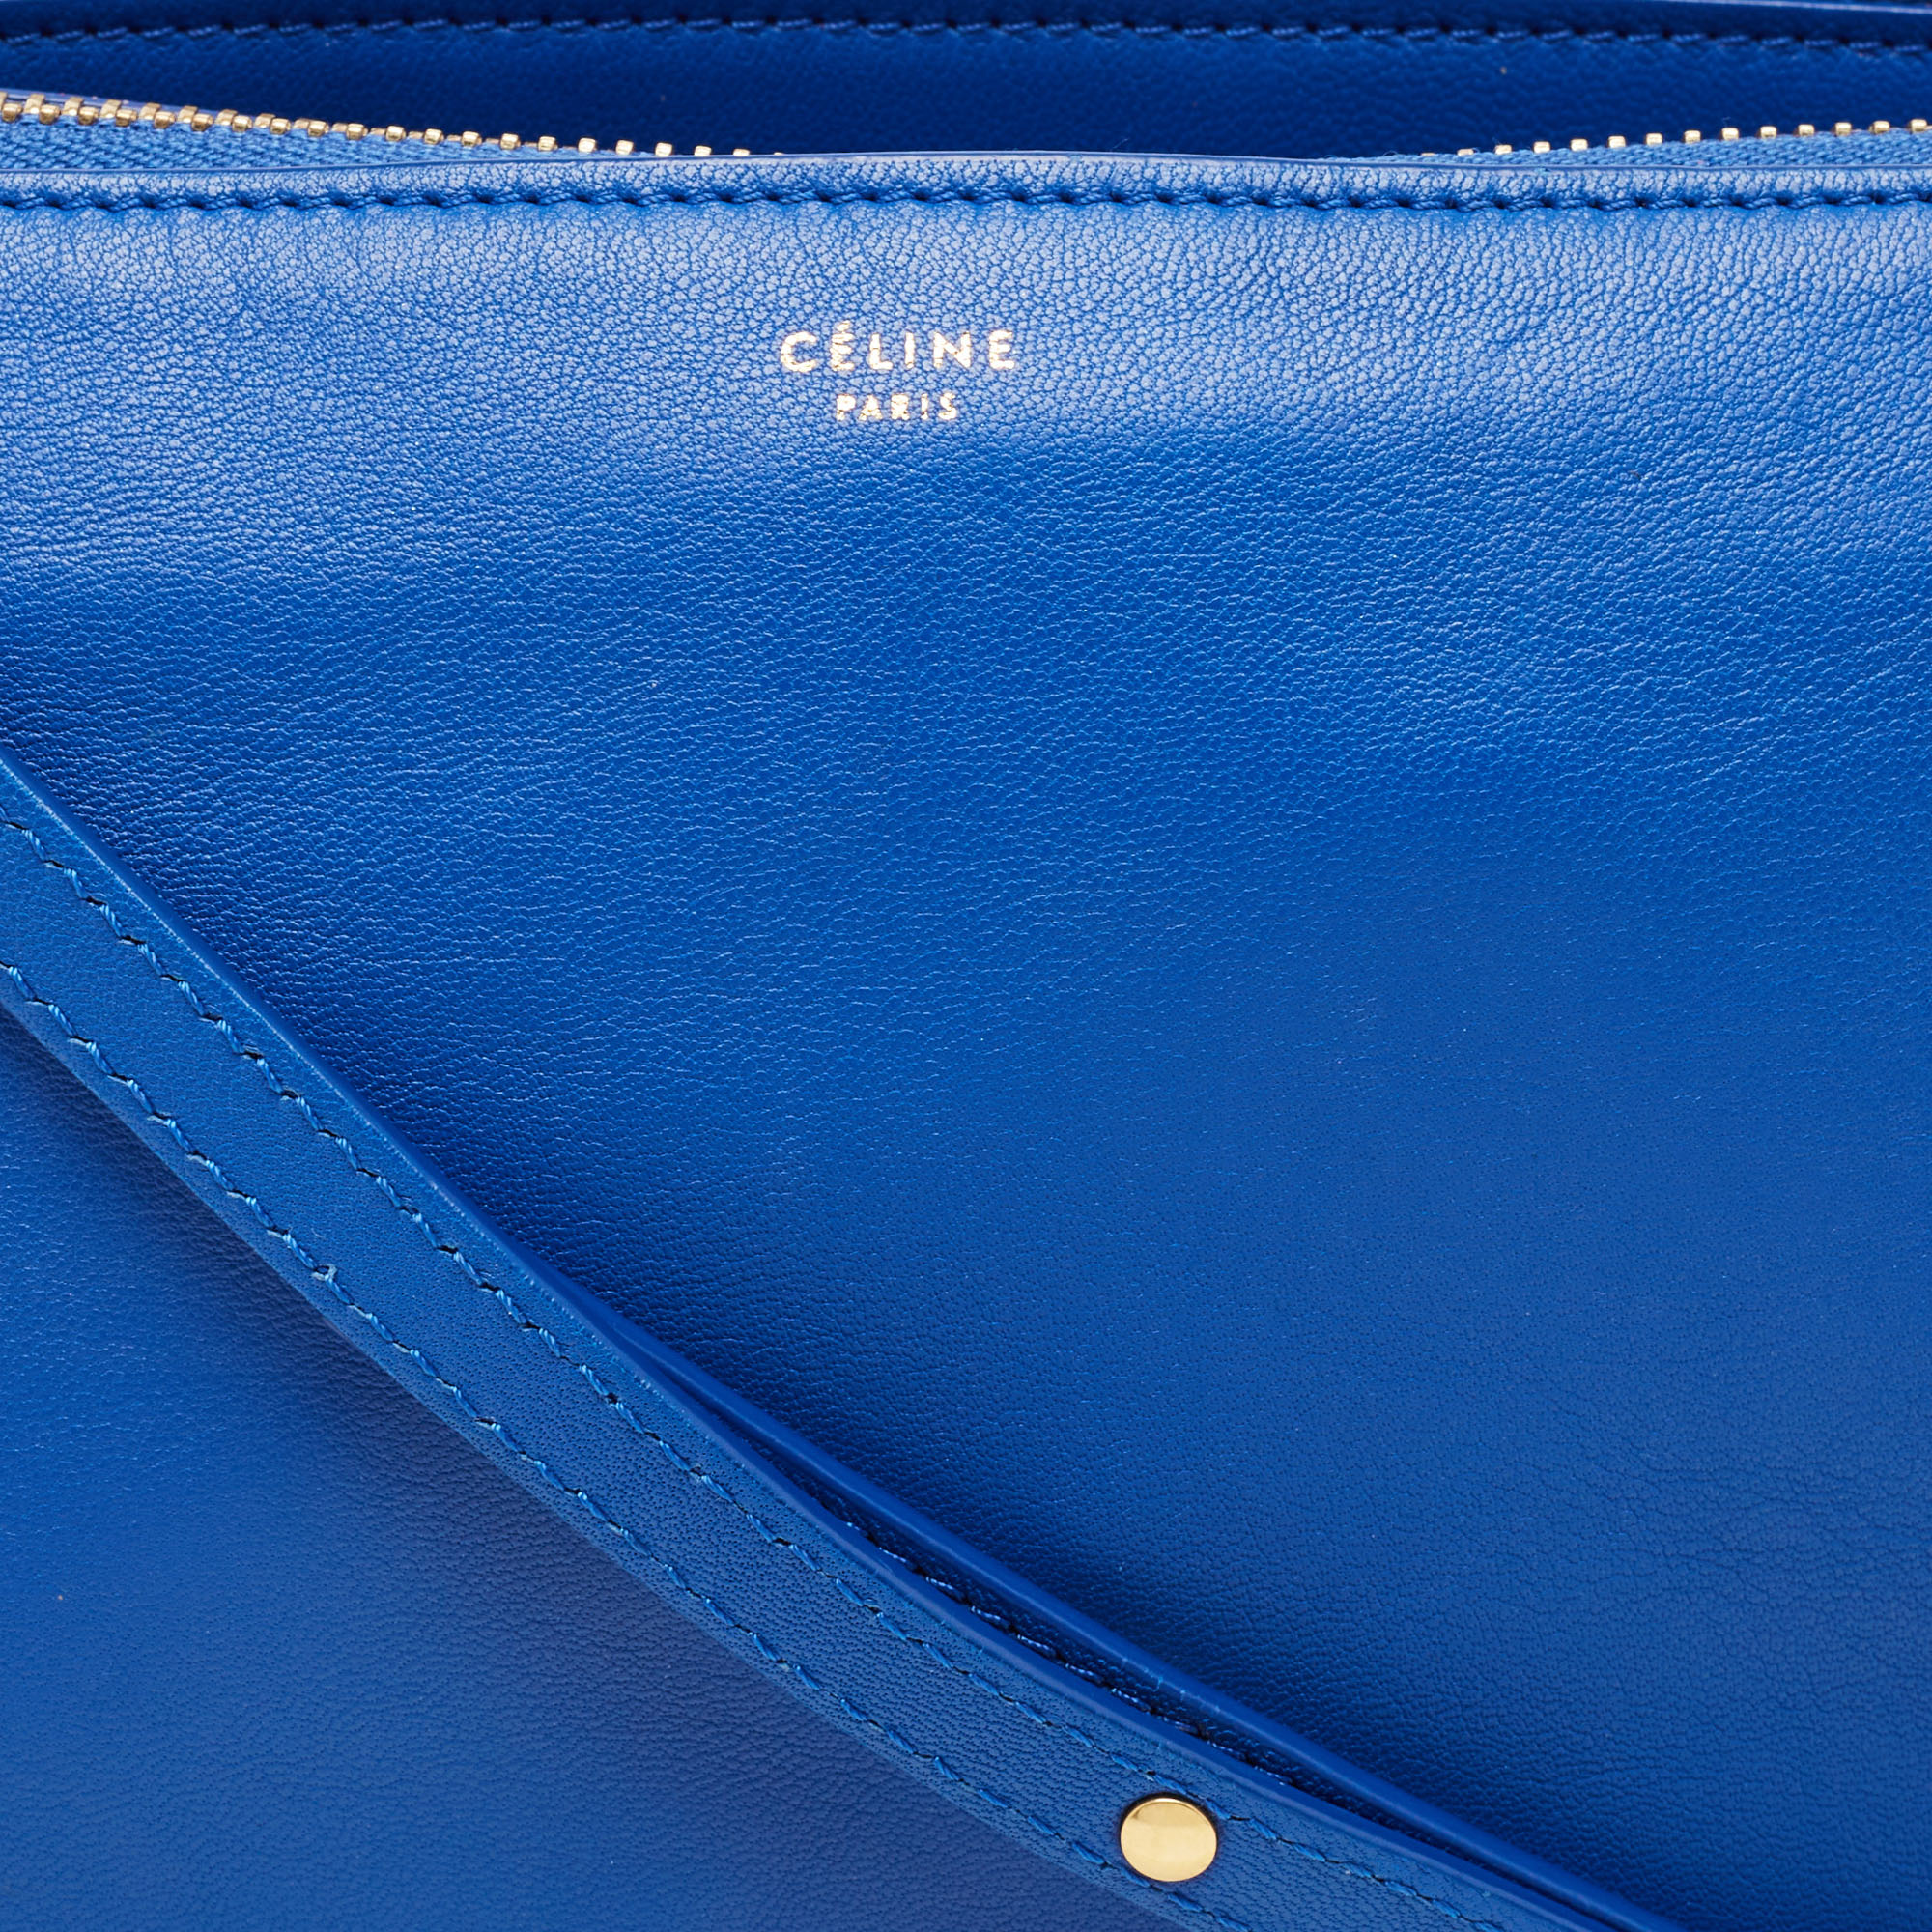 Celine Blue Leather Large Trio Zip Crossbody Bag